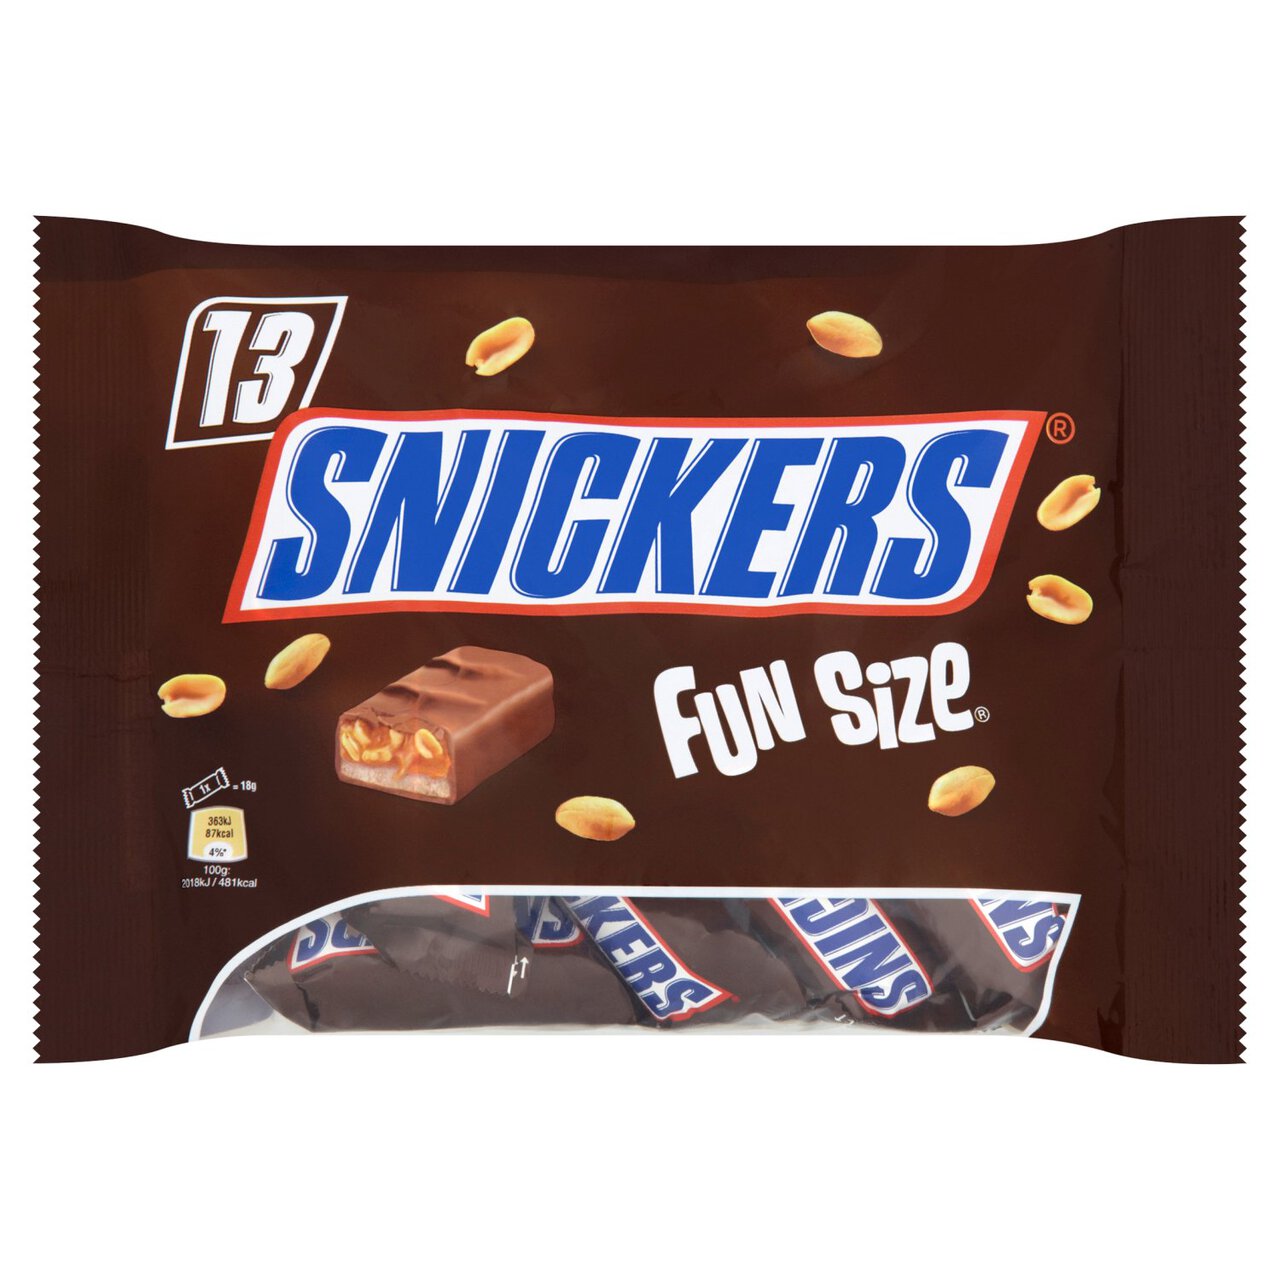 Snickers Caramel, Nougat, Peanuts & Milk Chocolate Bars Funsize Multipack 13 x 18g